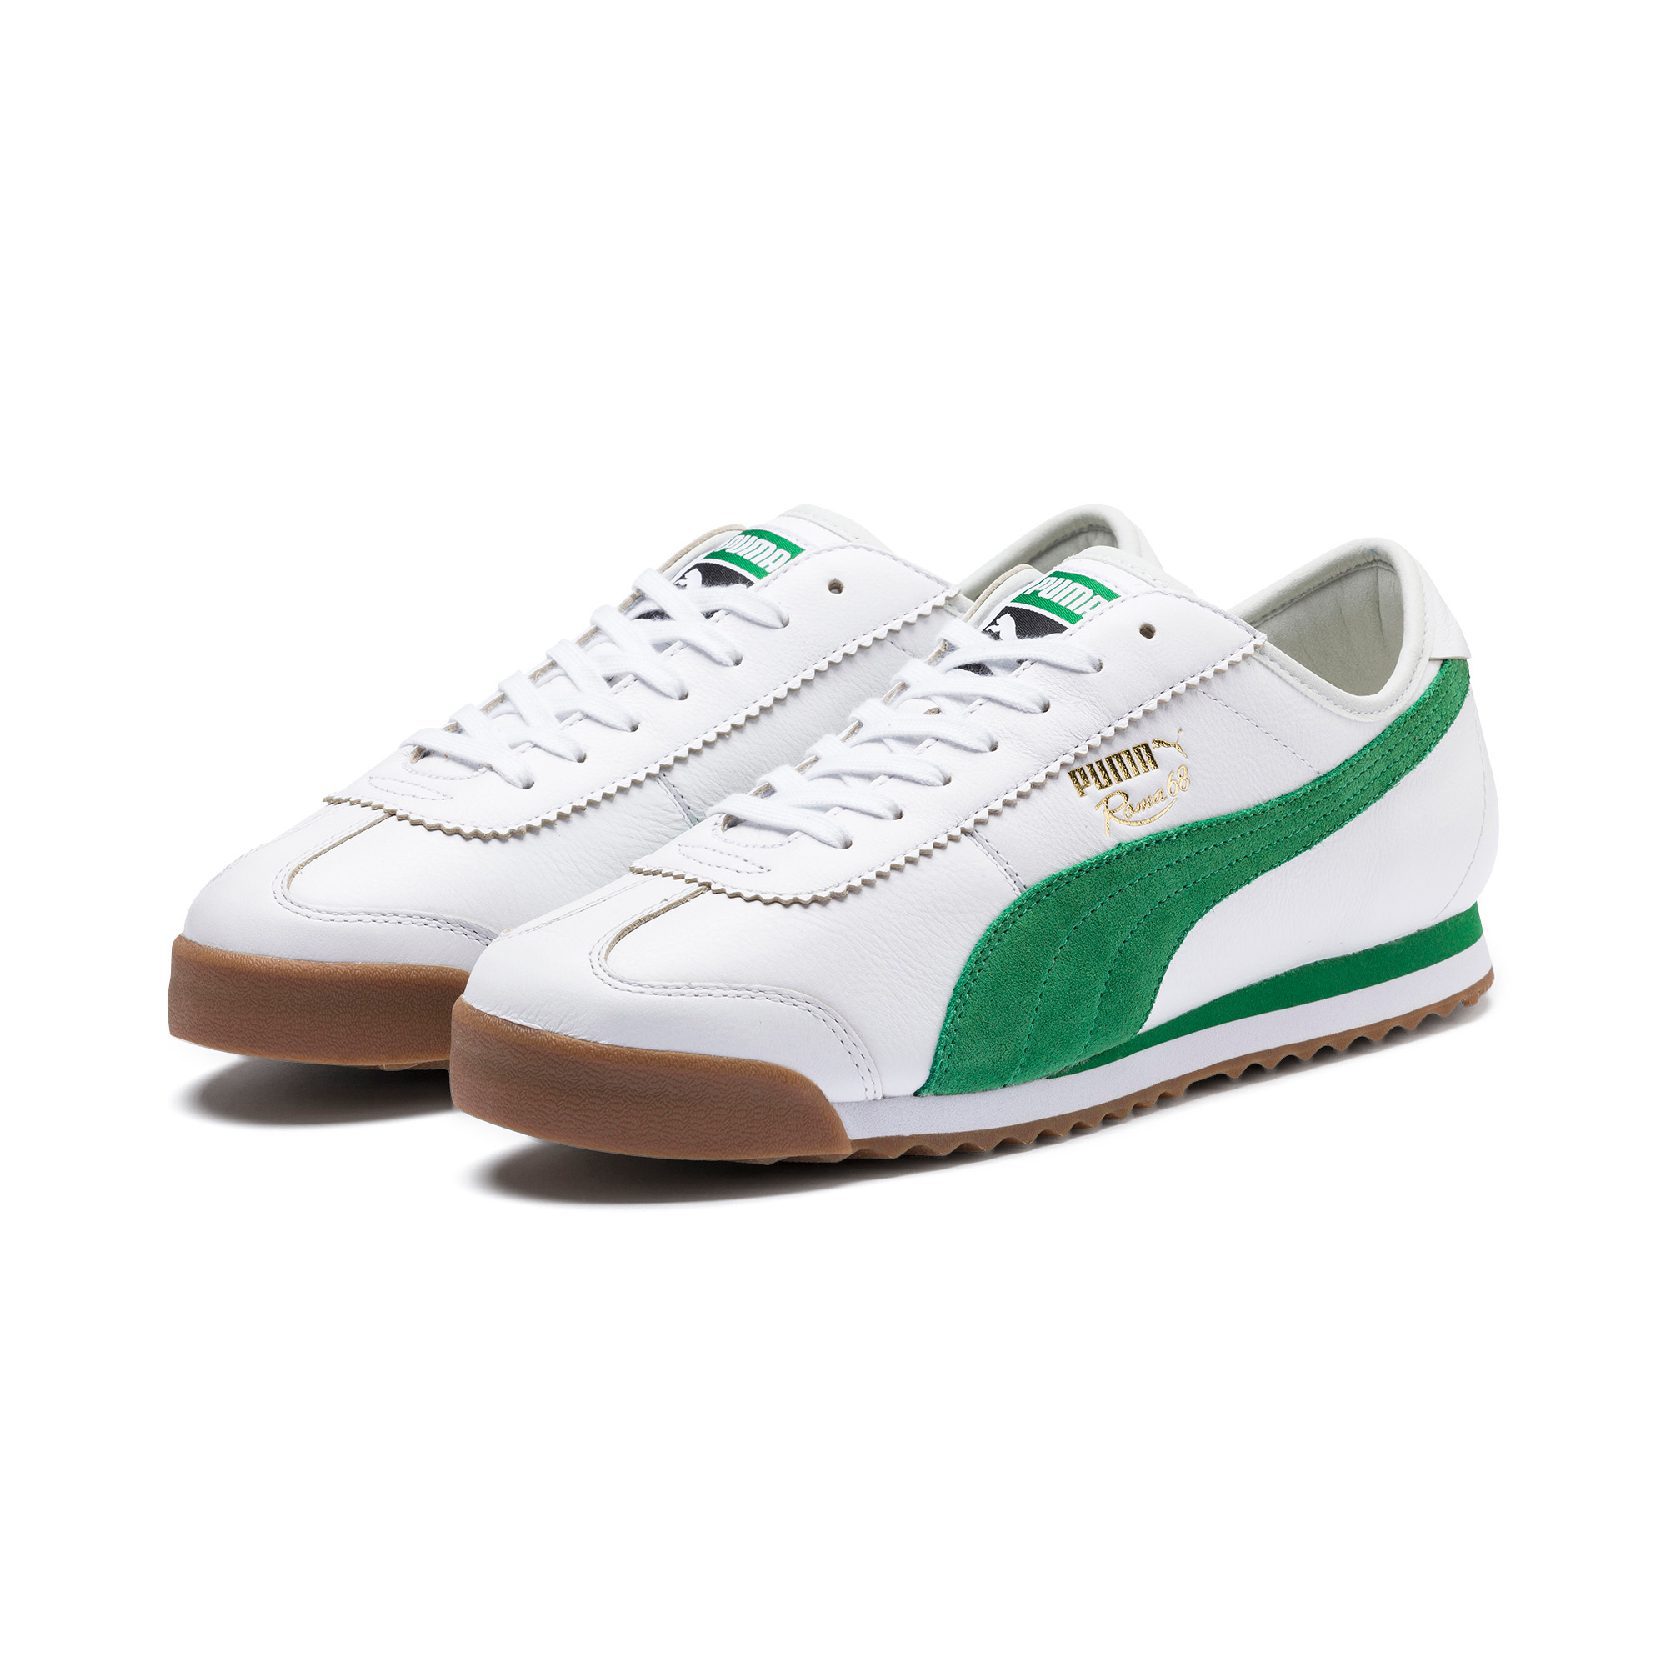 PUMA Men's Roma '68 OG Puma White/Amazon Green Sneakers 37060102 ...